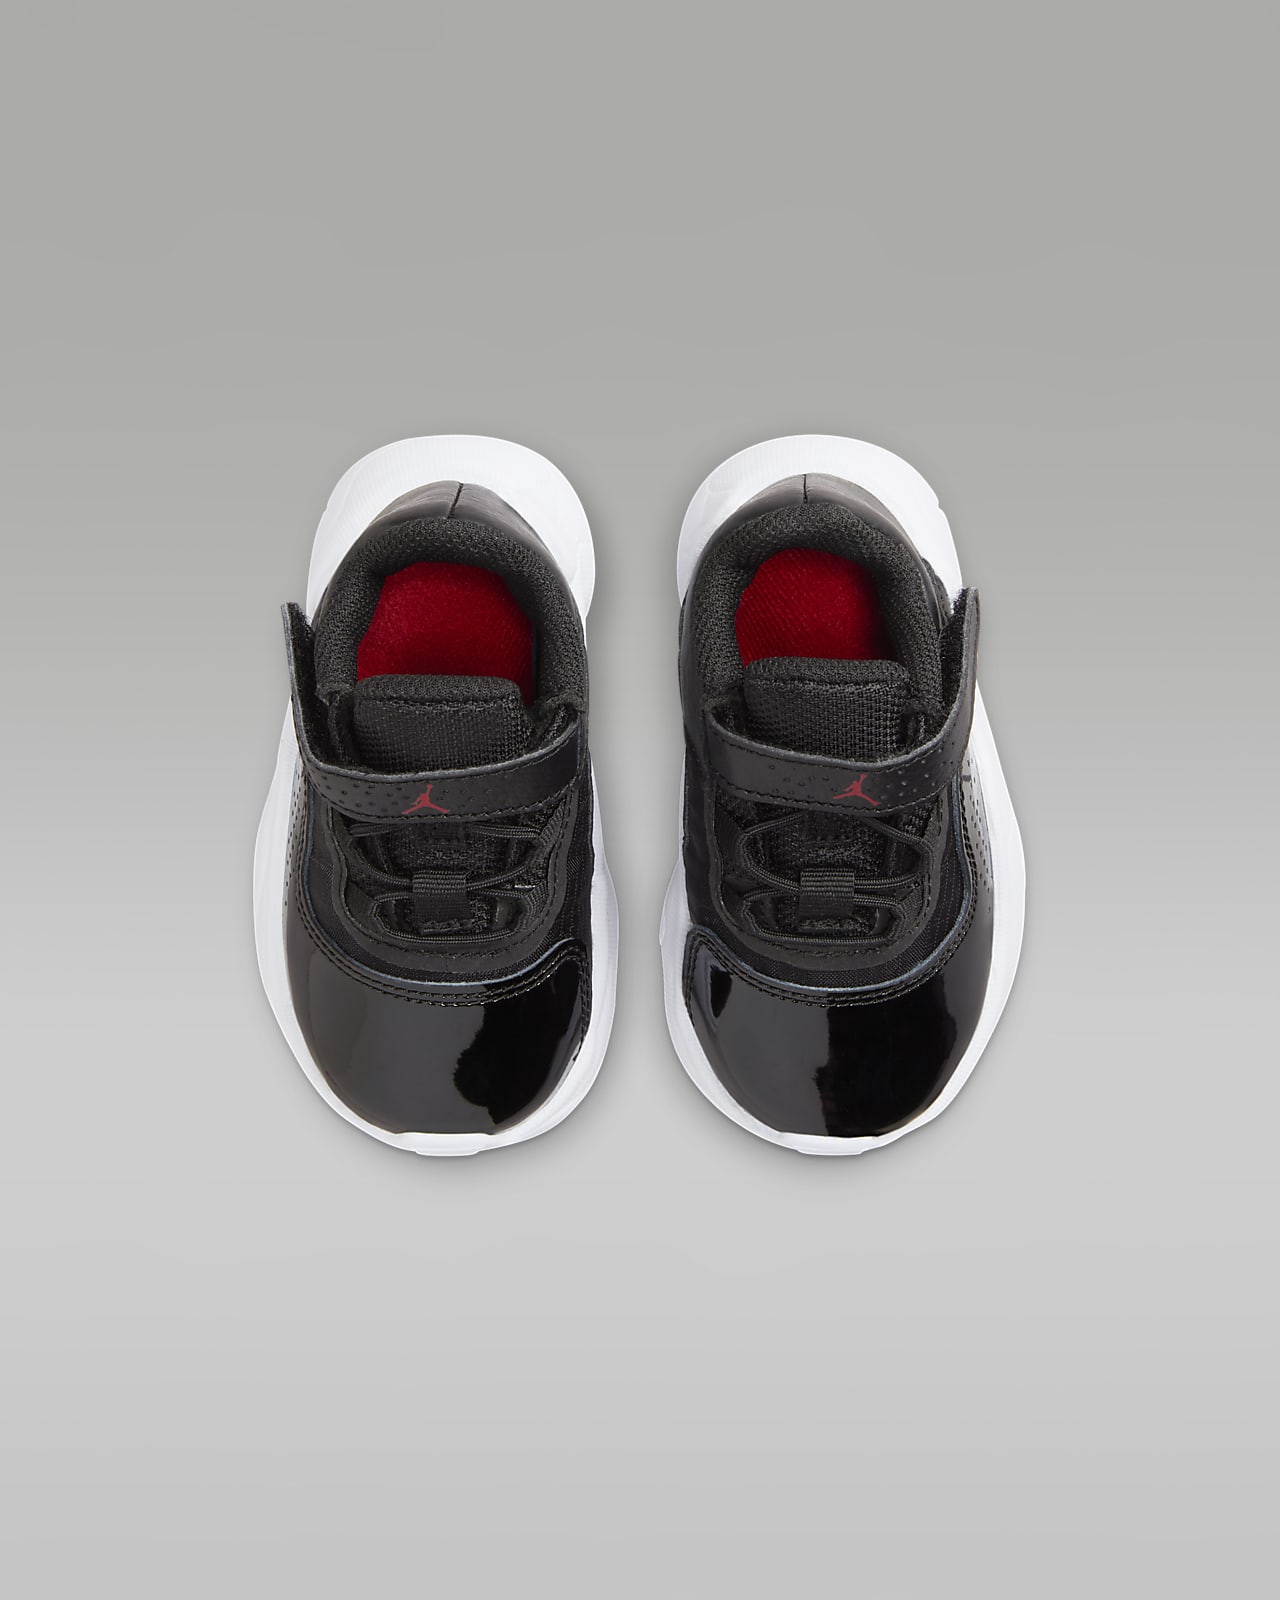 Dark Knight 11s low  Shoes, Jordan shoes, Sneakers